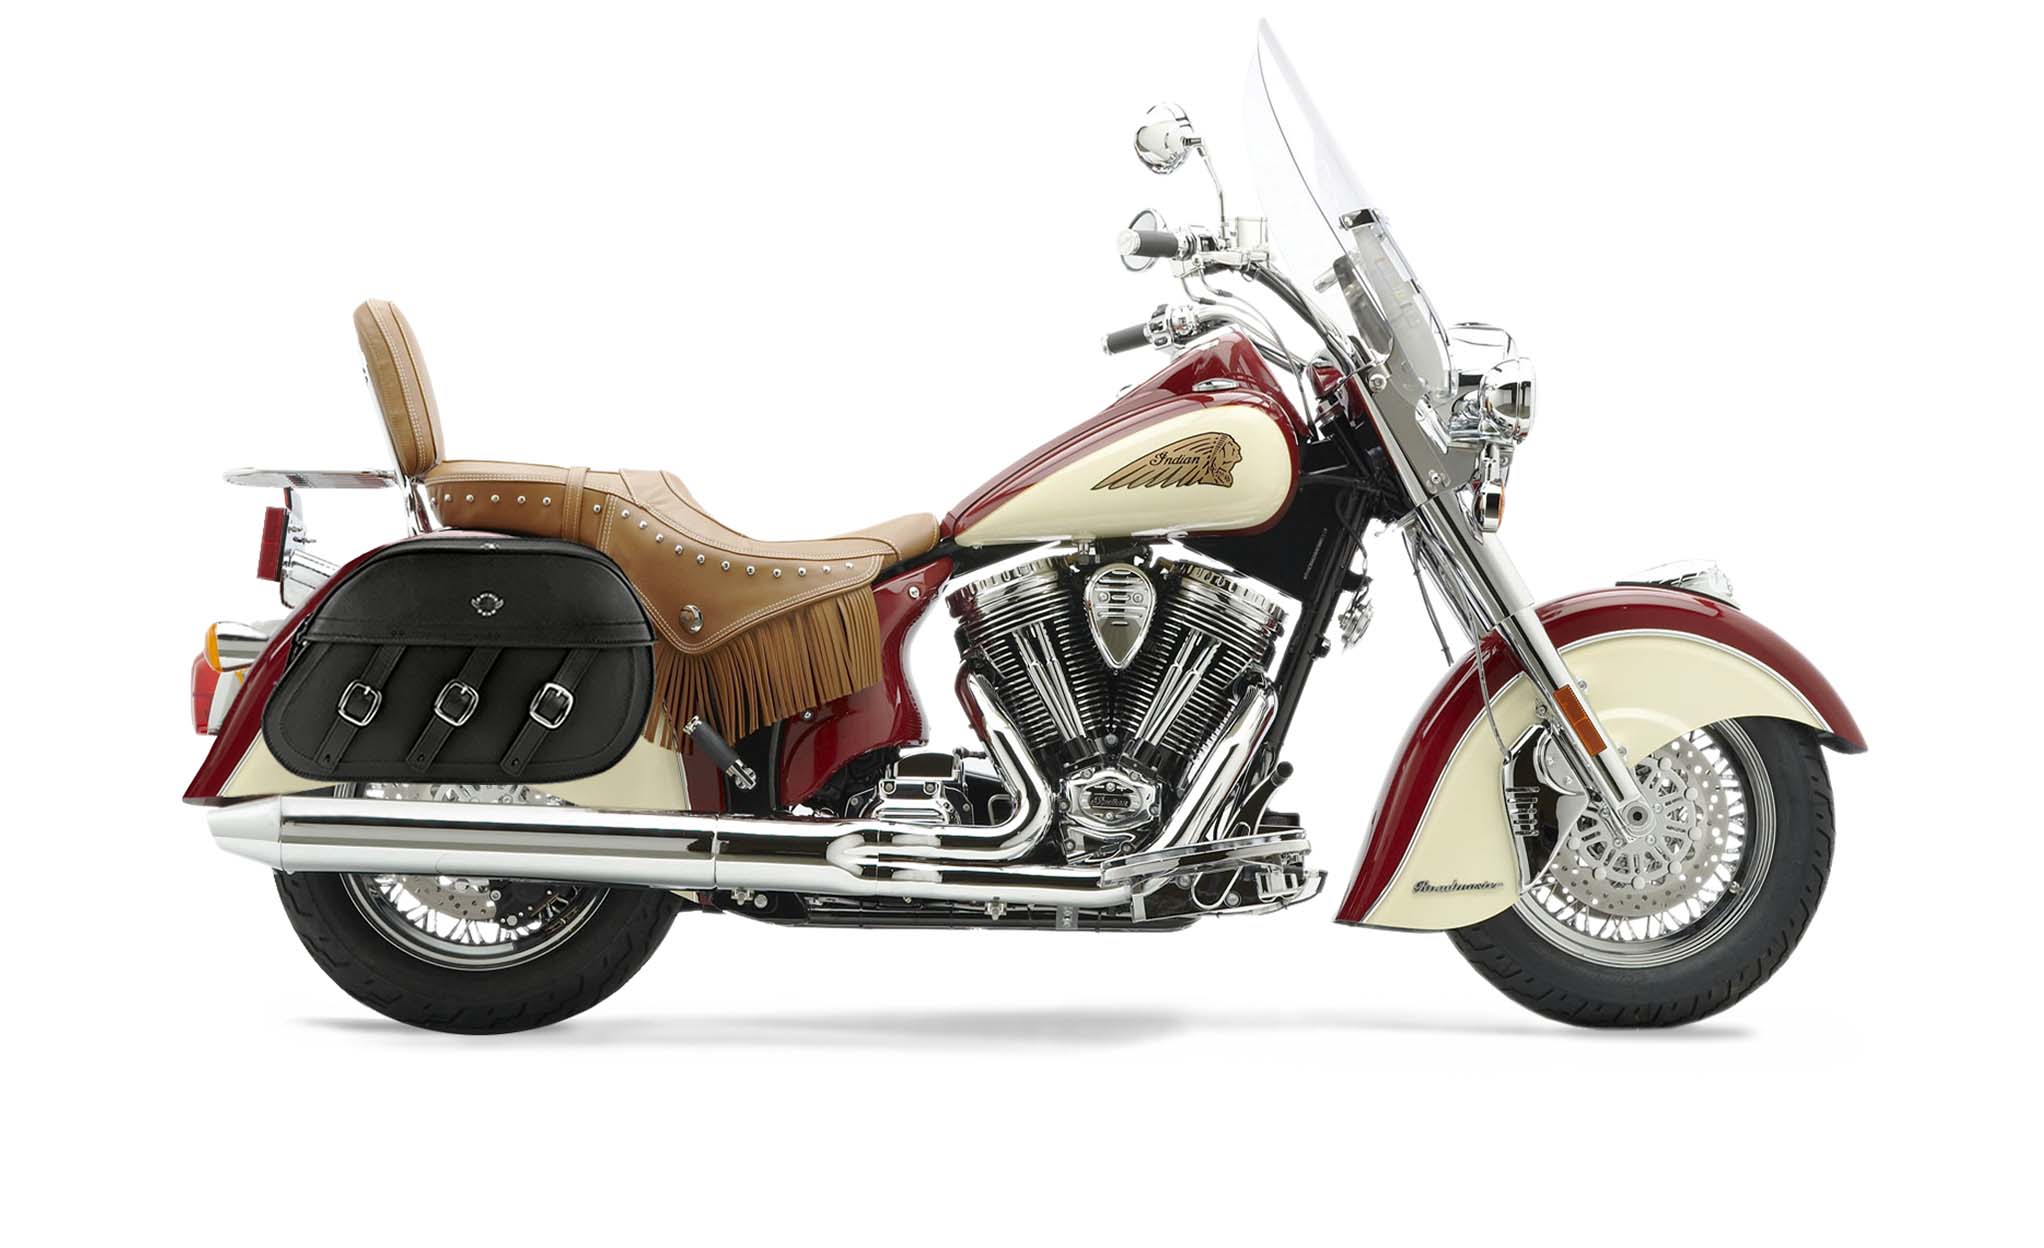 Viking Trianon Extra Large Indian Chief Roadmaster Leather Motorcycle Saddlebags on Bike Photo @expand